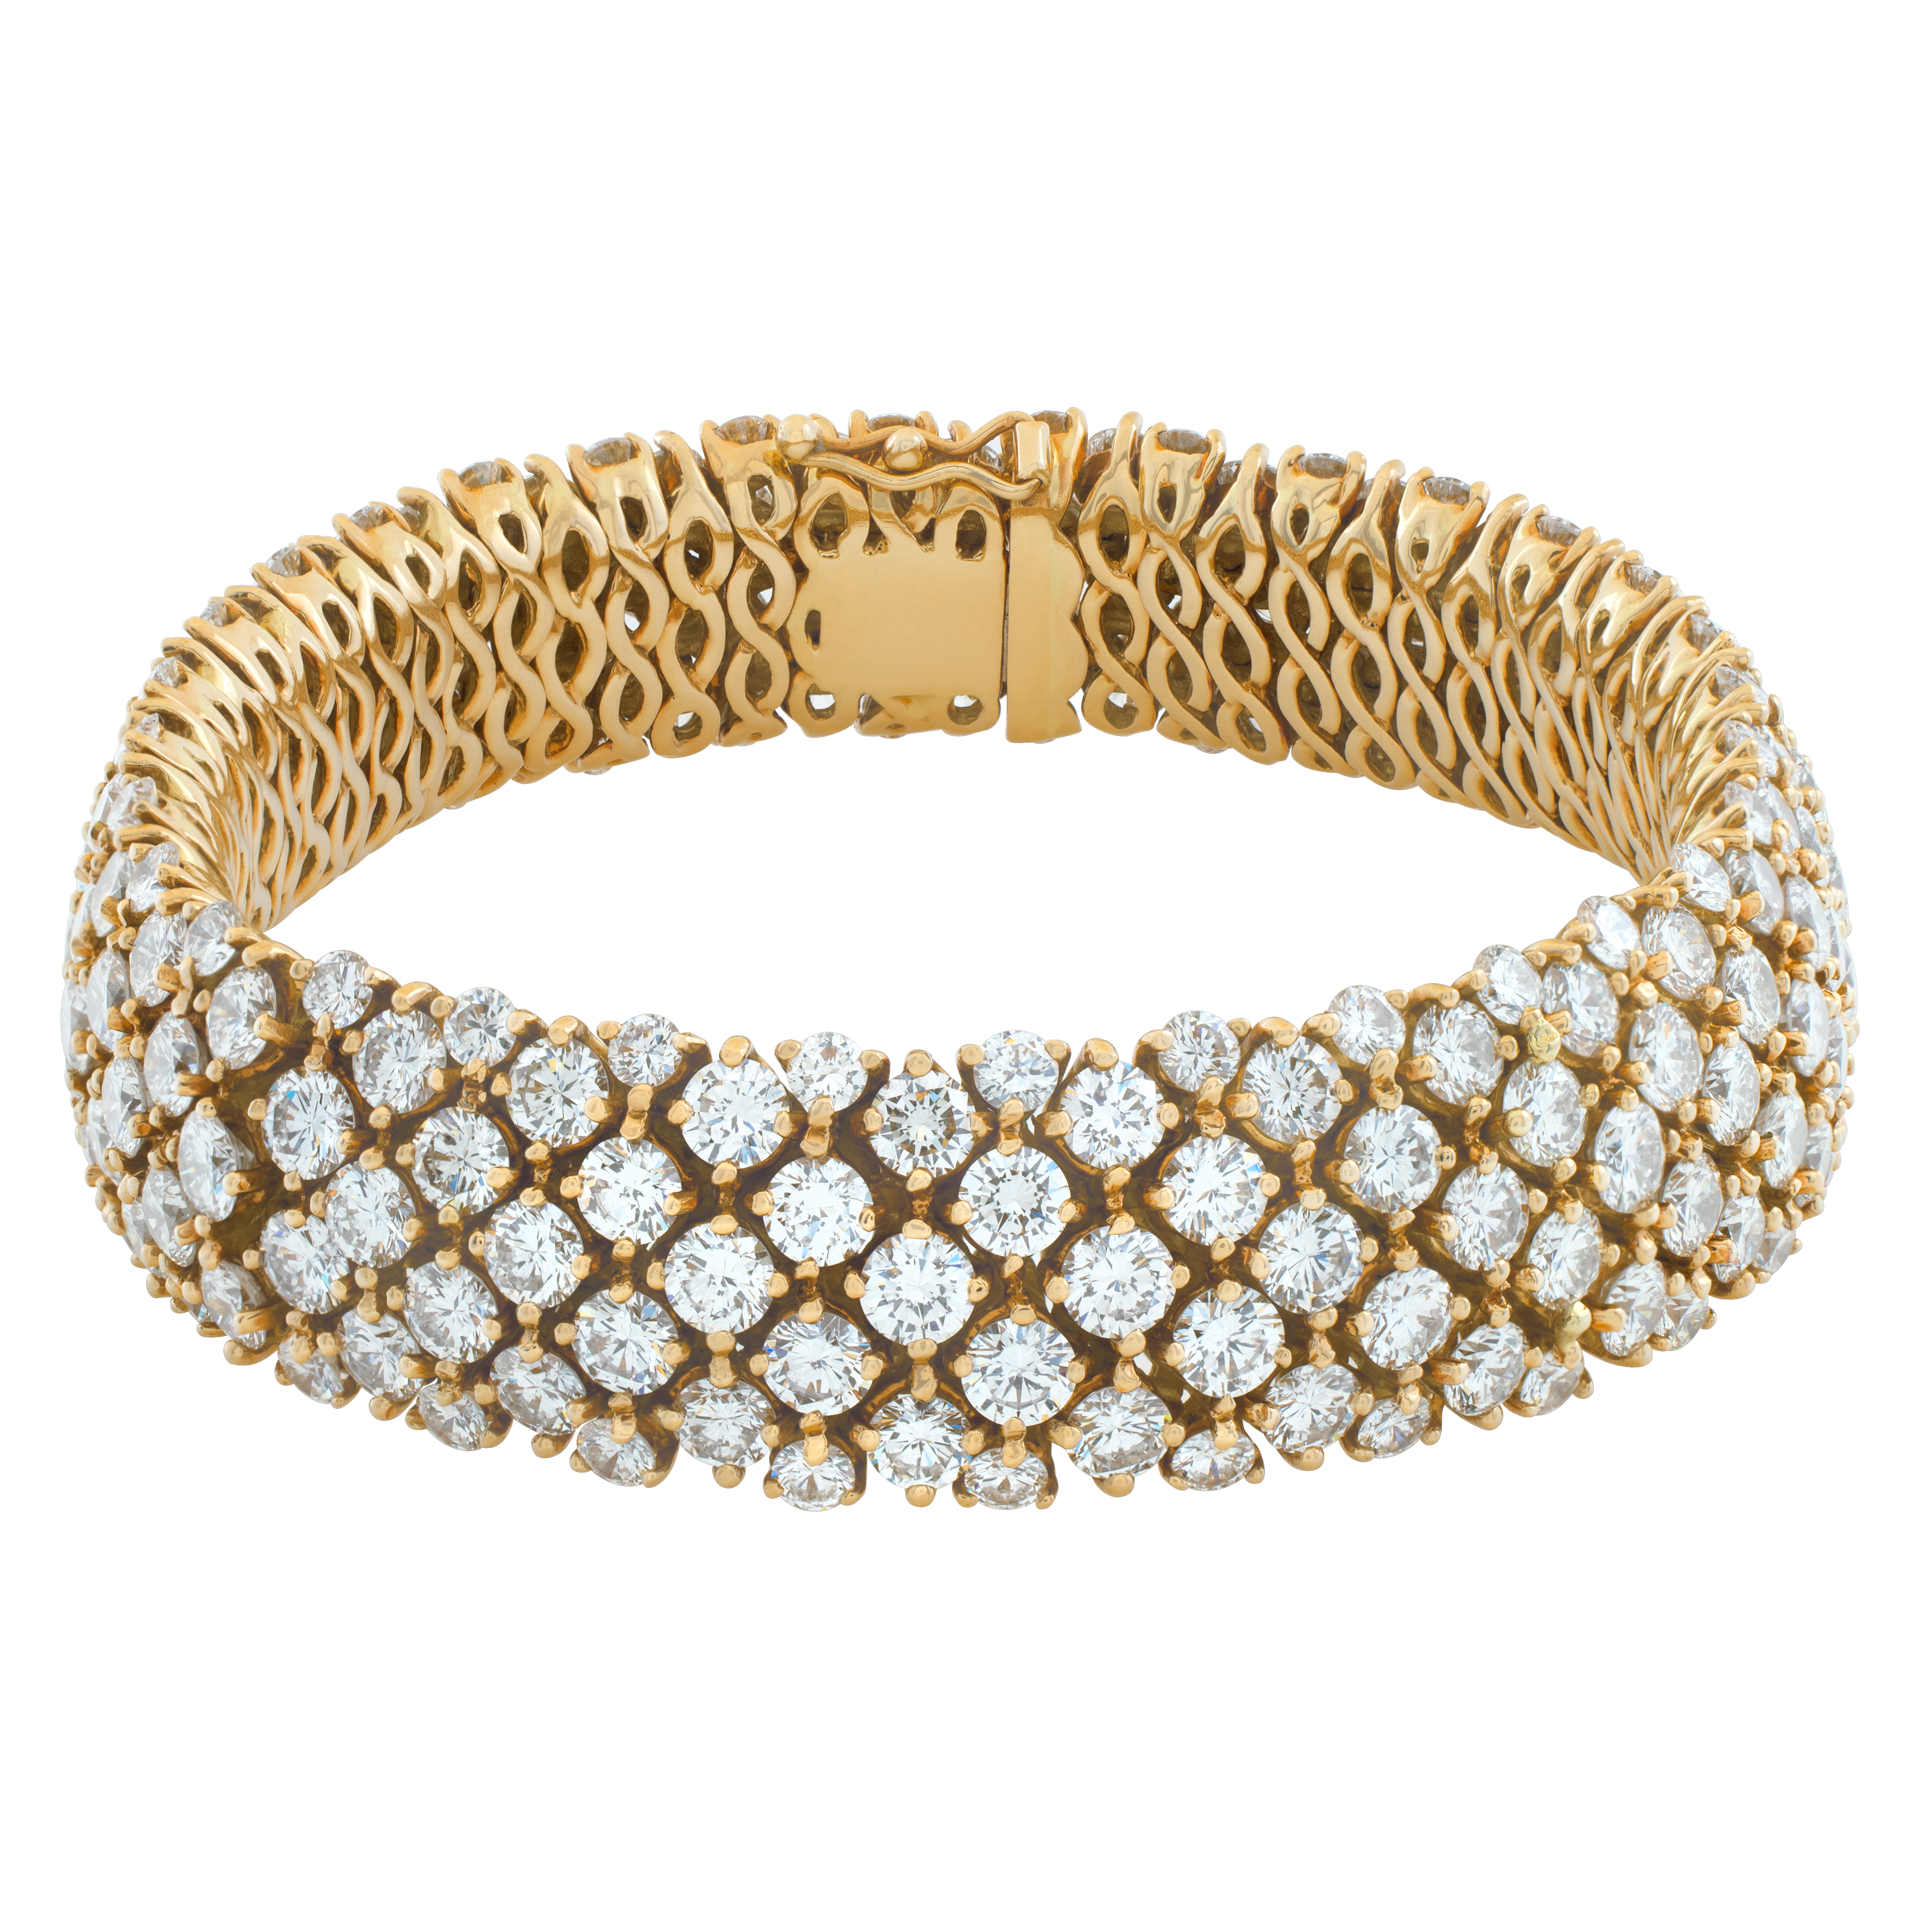 Diamonds bracelet with over 35 carats round brilliant cut diamonds, set in 18K gold.